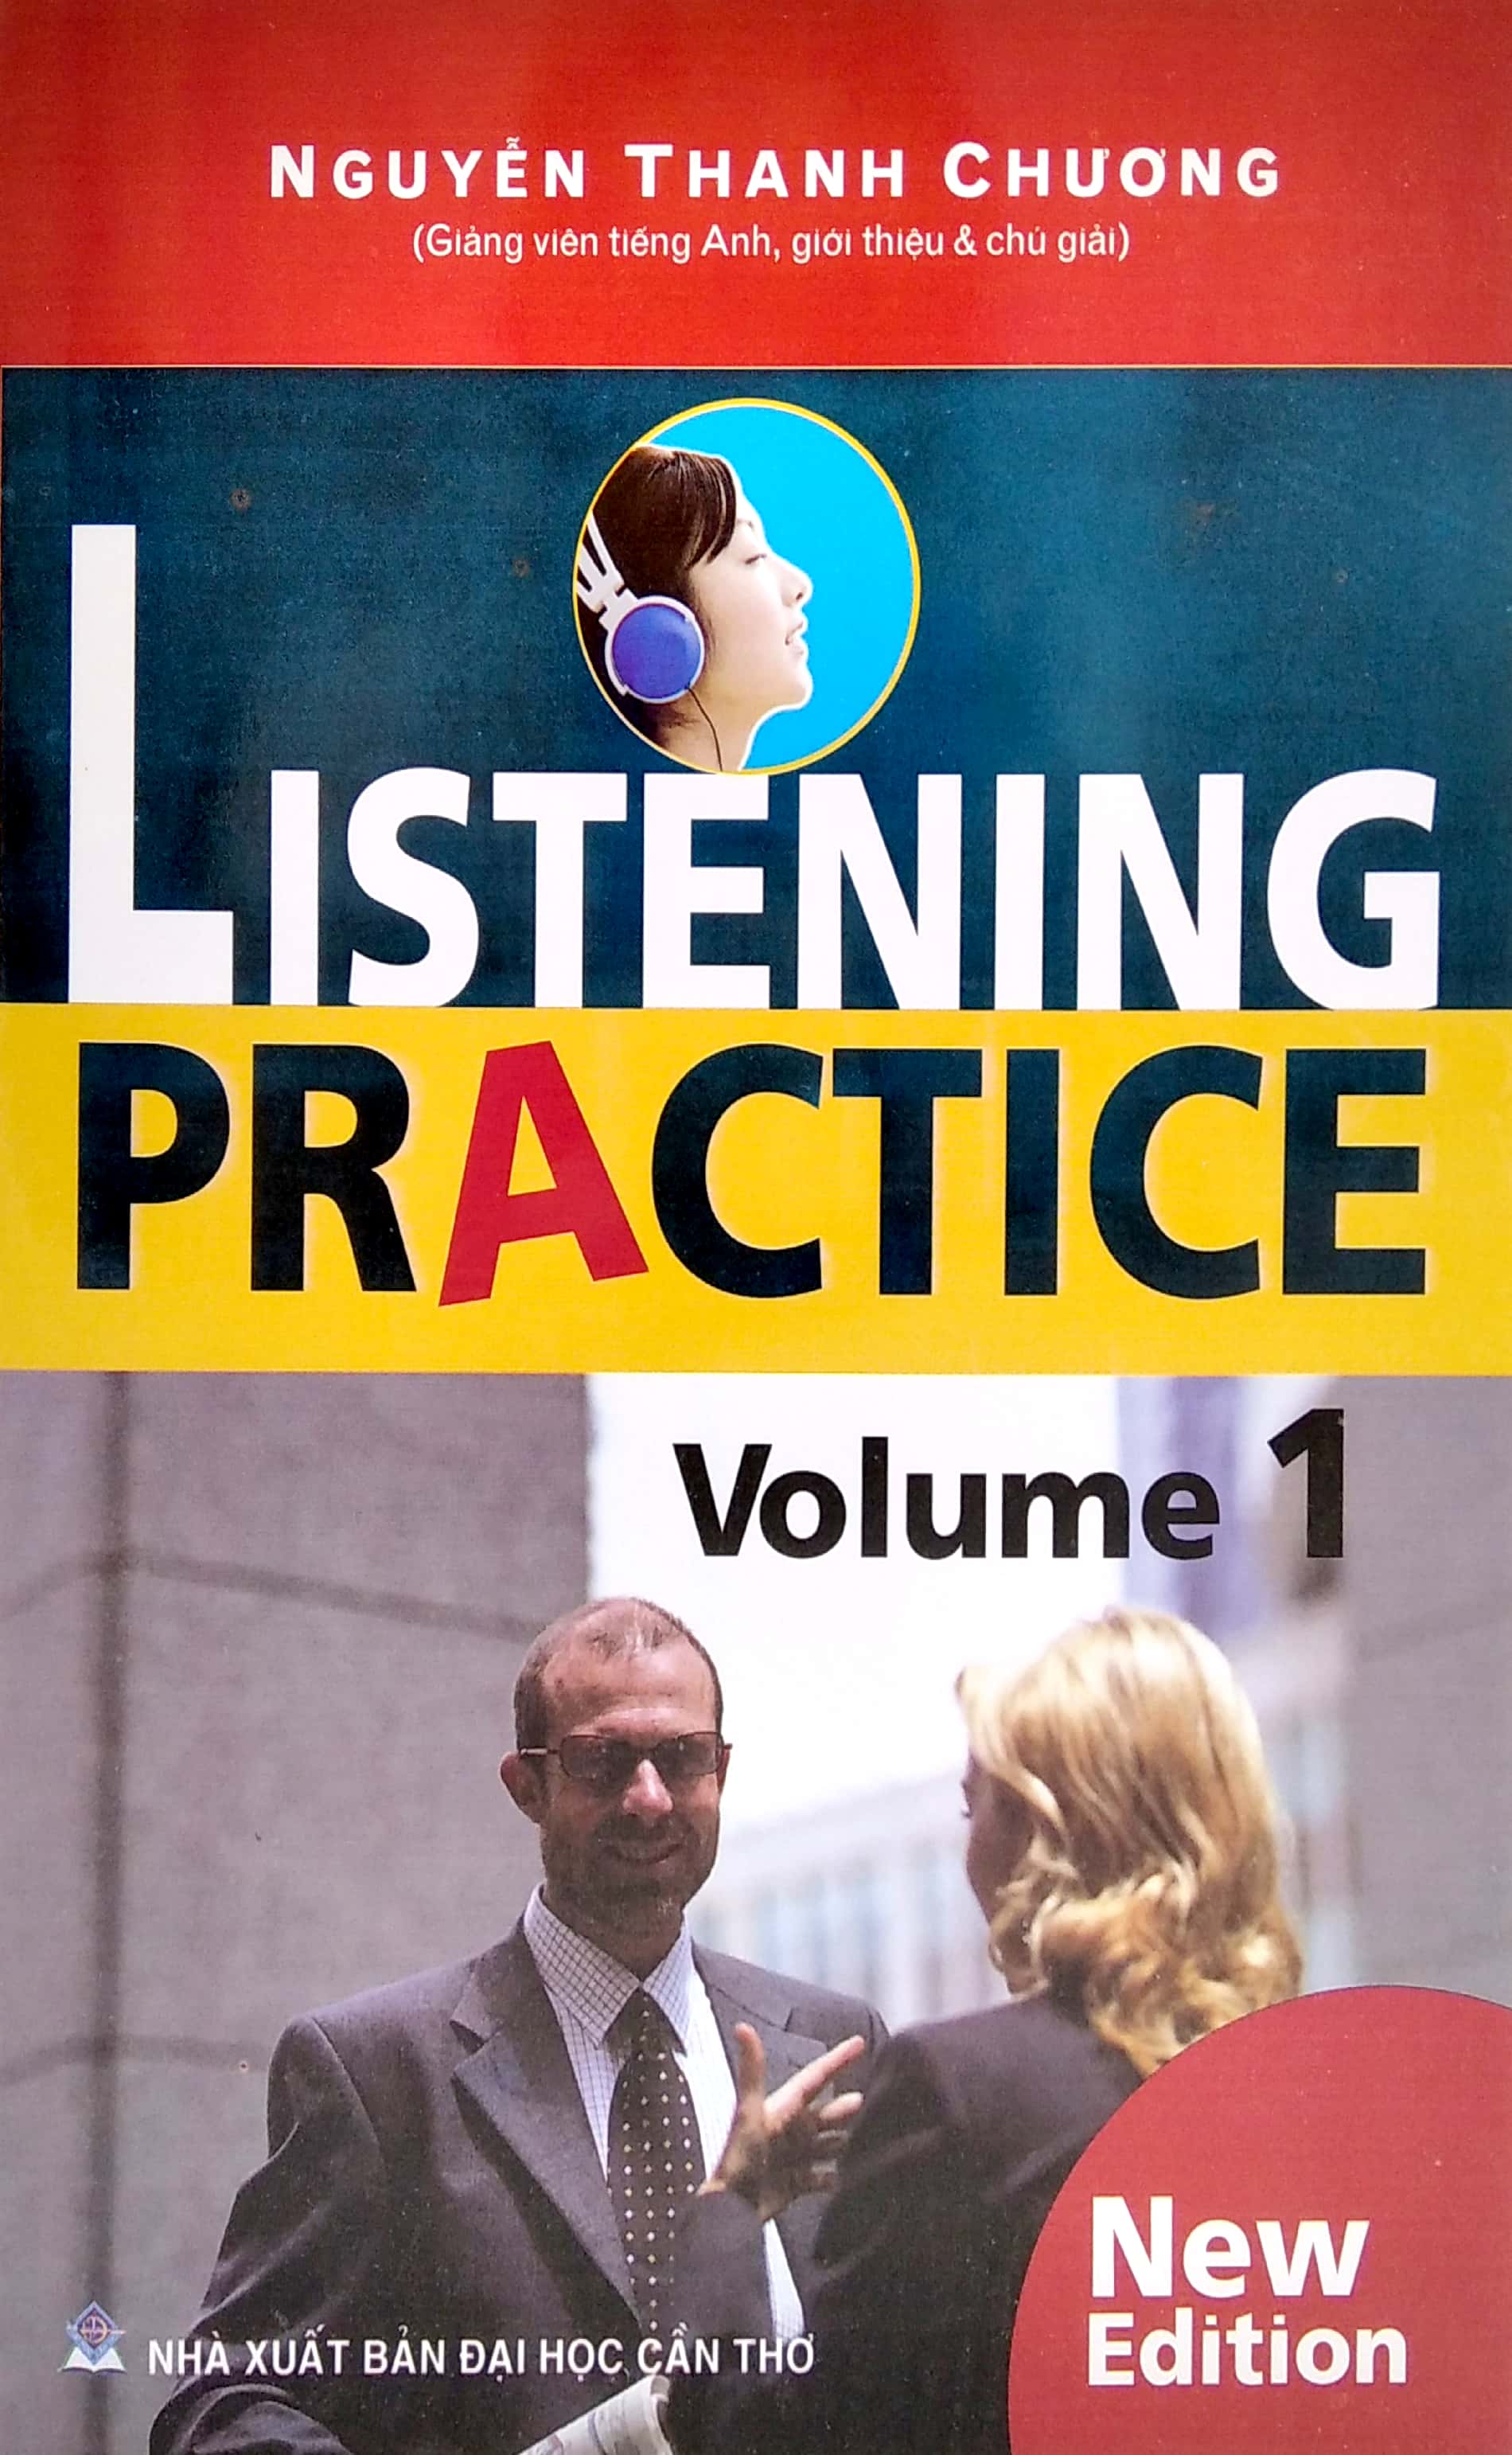 Listening Pratice Volume 1 PDF